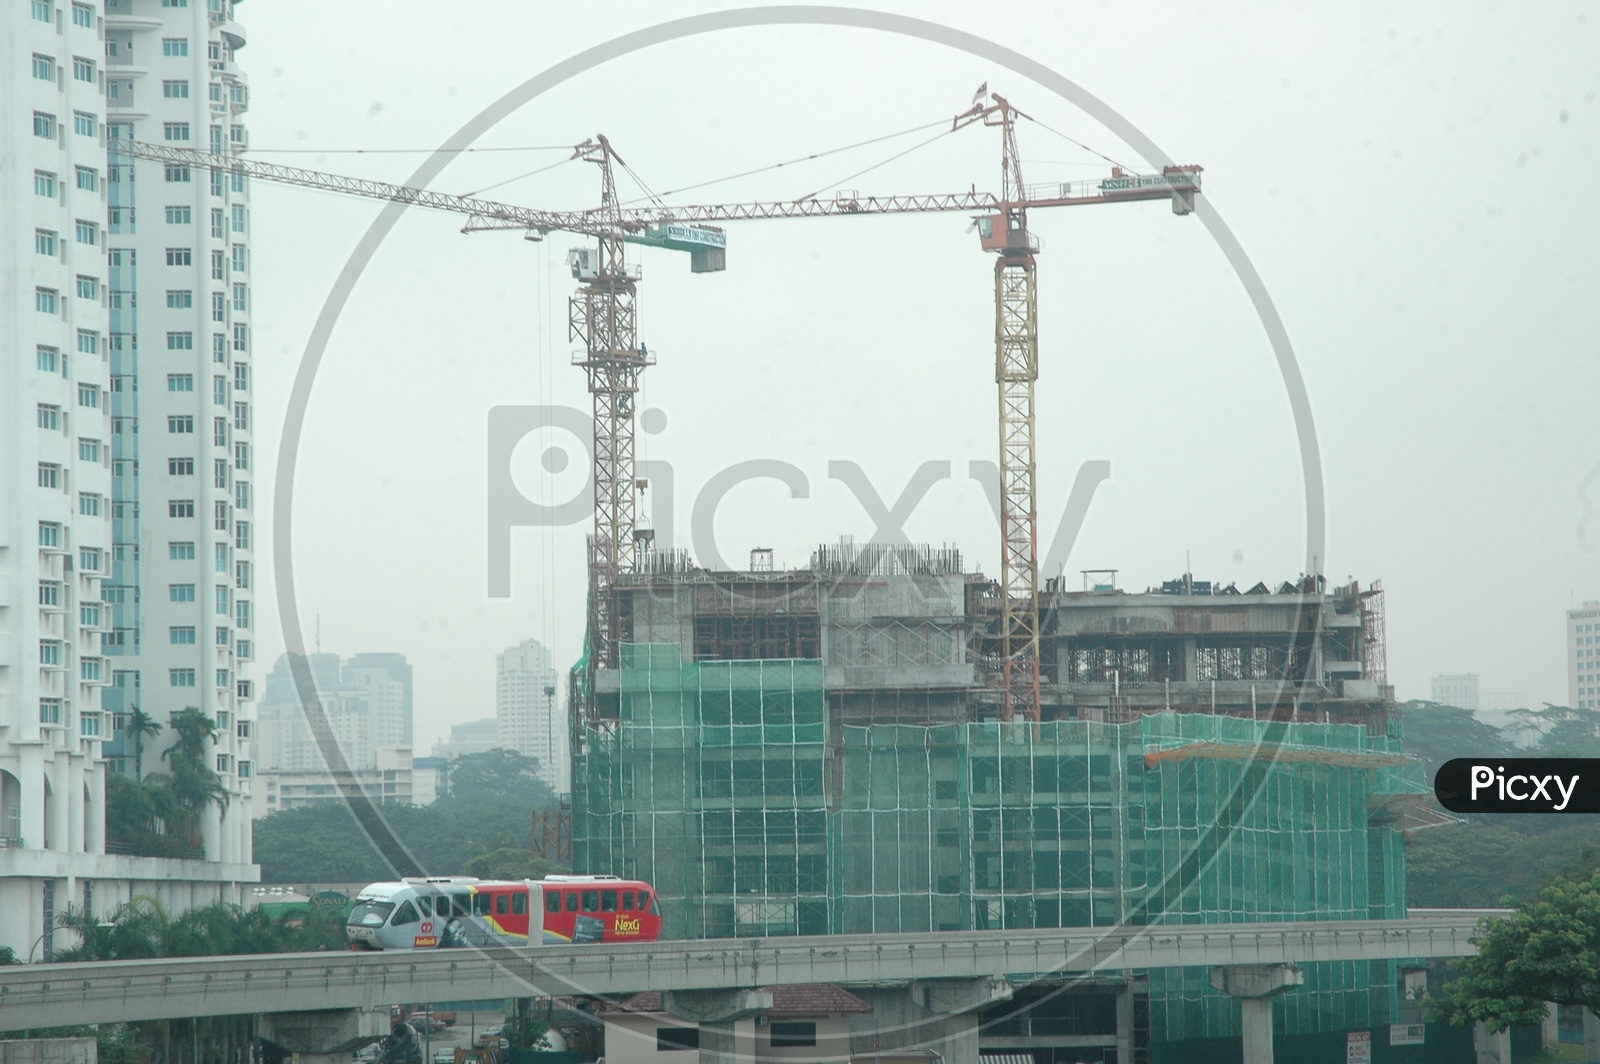 Tower Cranes alongside the construction of hi rise buildings